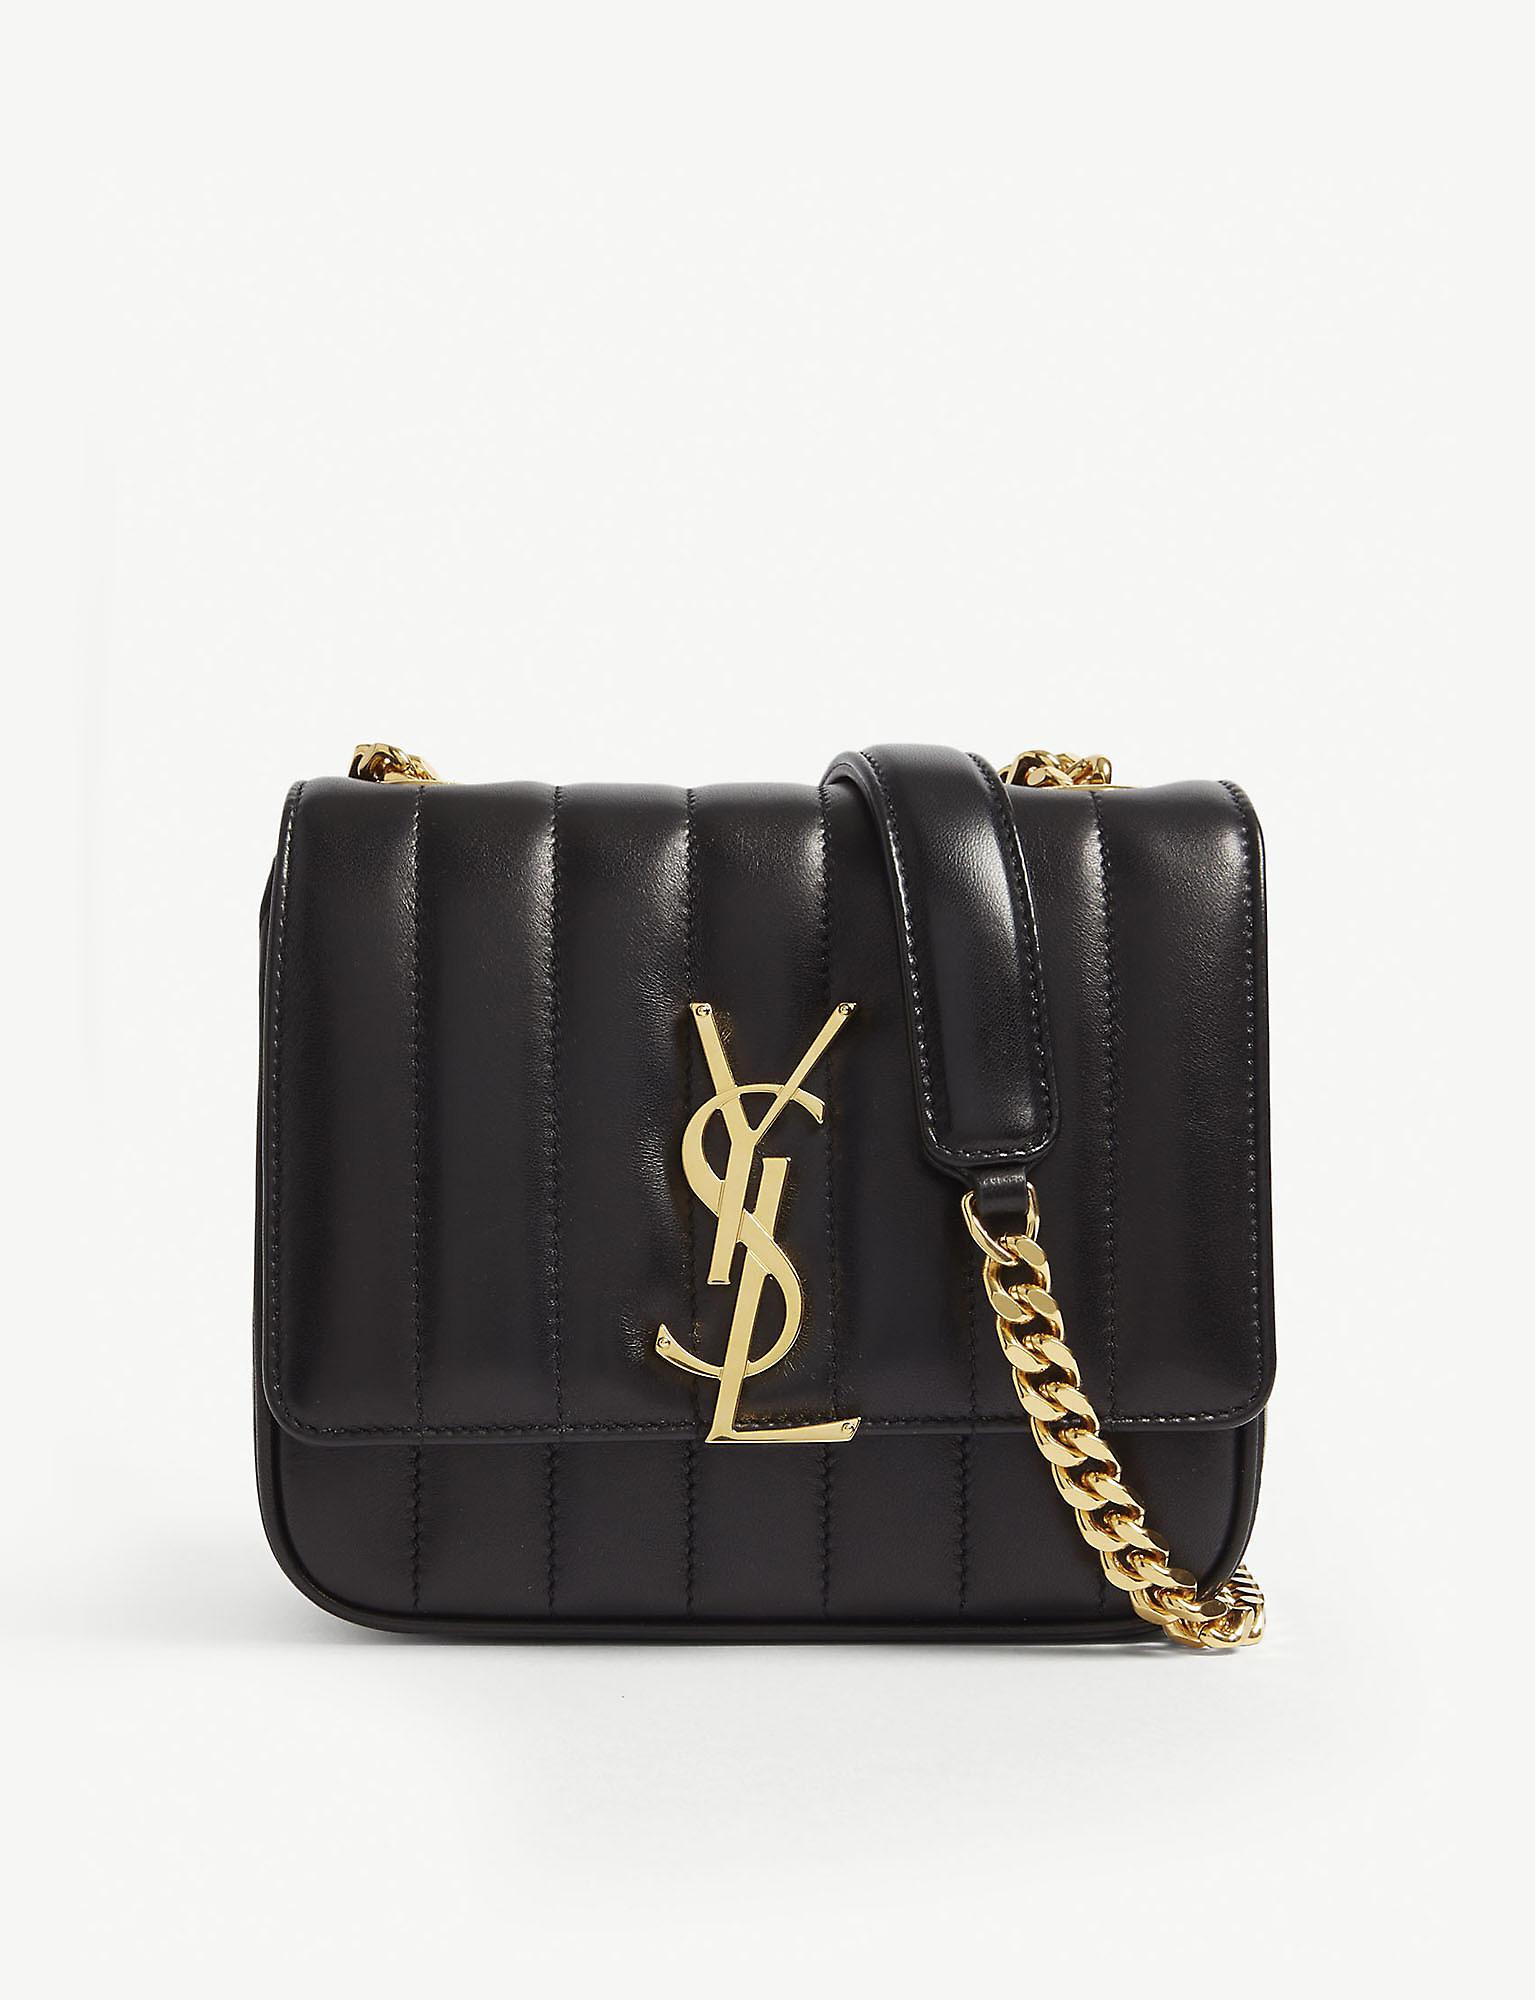 Saint Laurent Vicky Medium Ysl Monogram Chain Crossbody Bag in Black